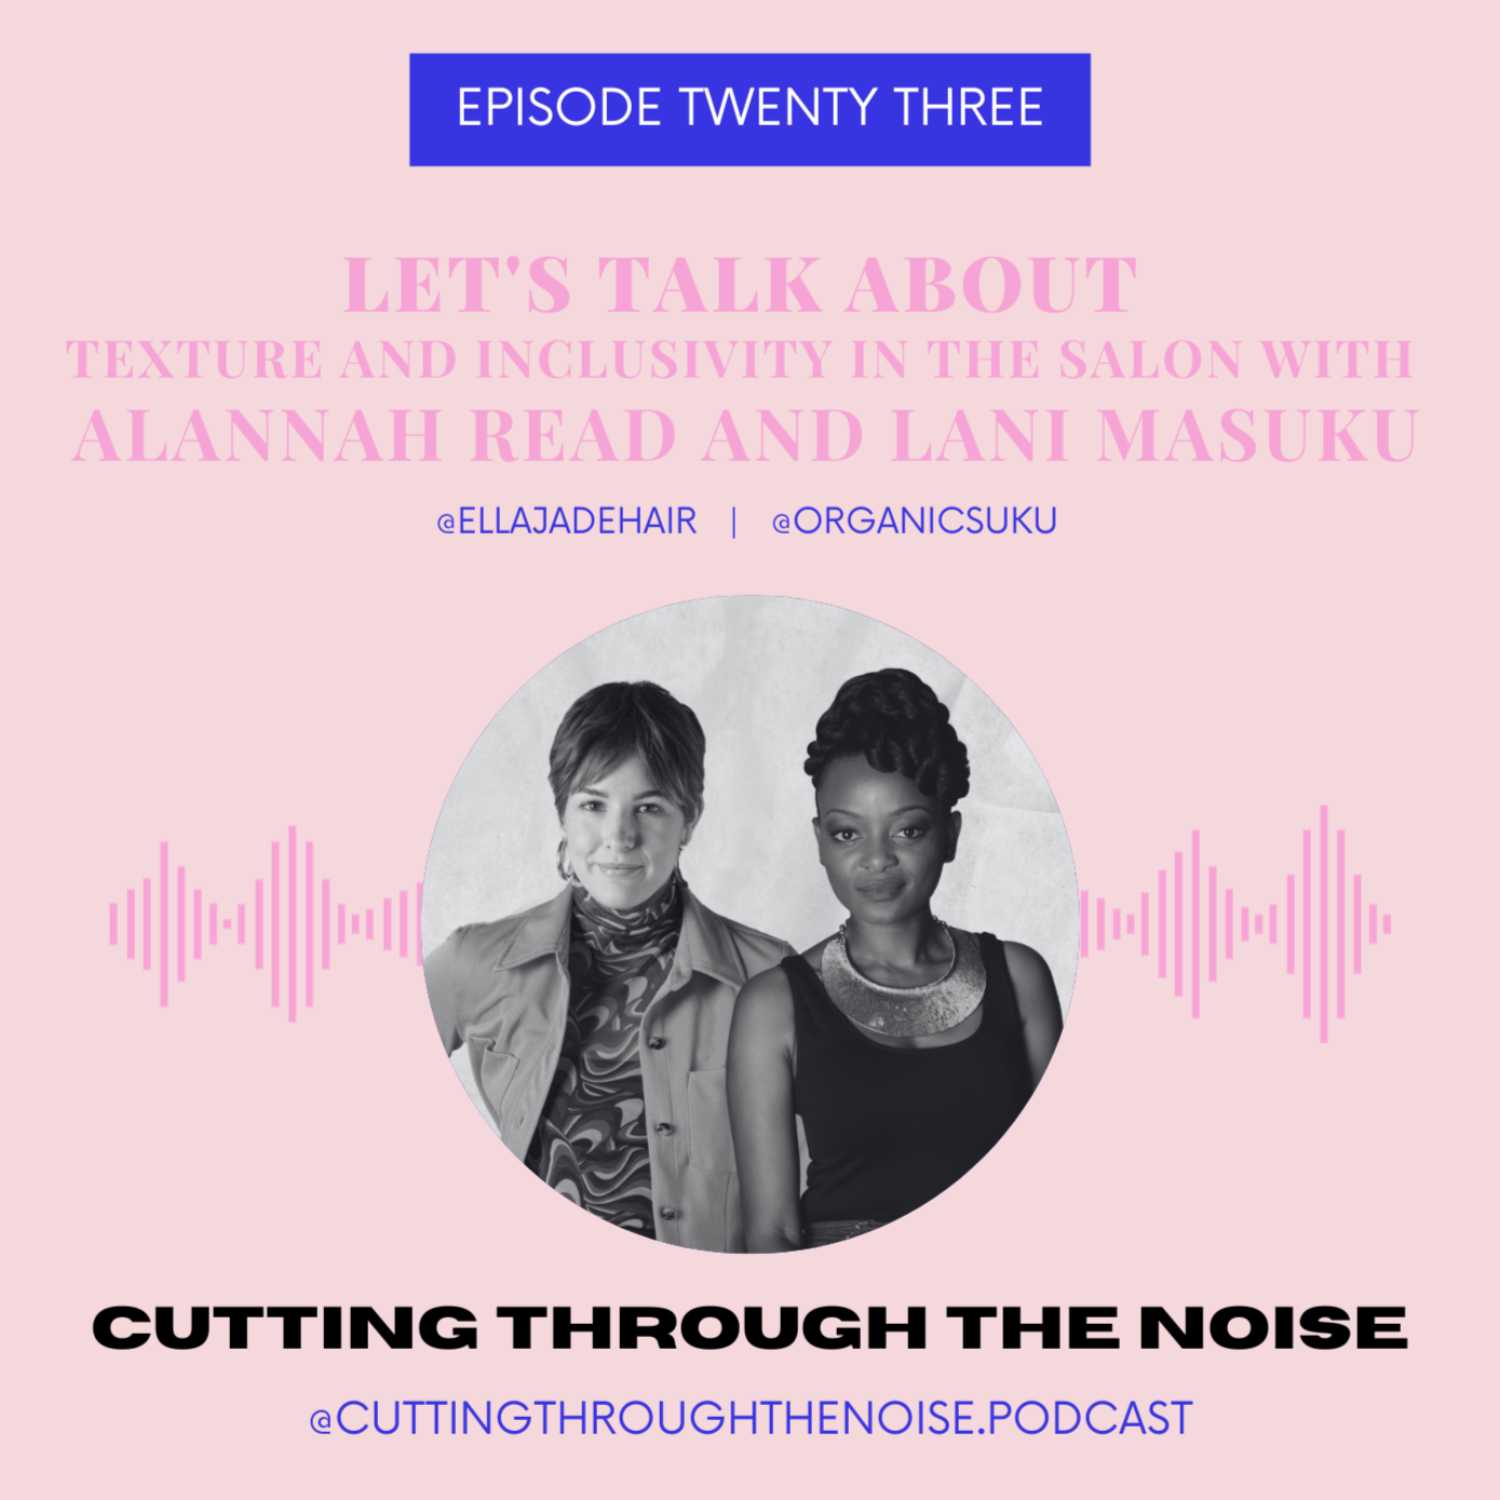 Episode Twenty Three: Alannah Read and Lani Masuku